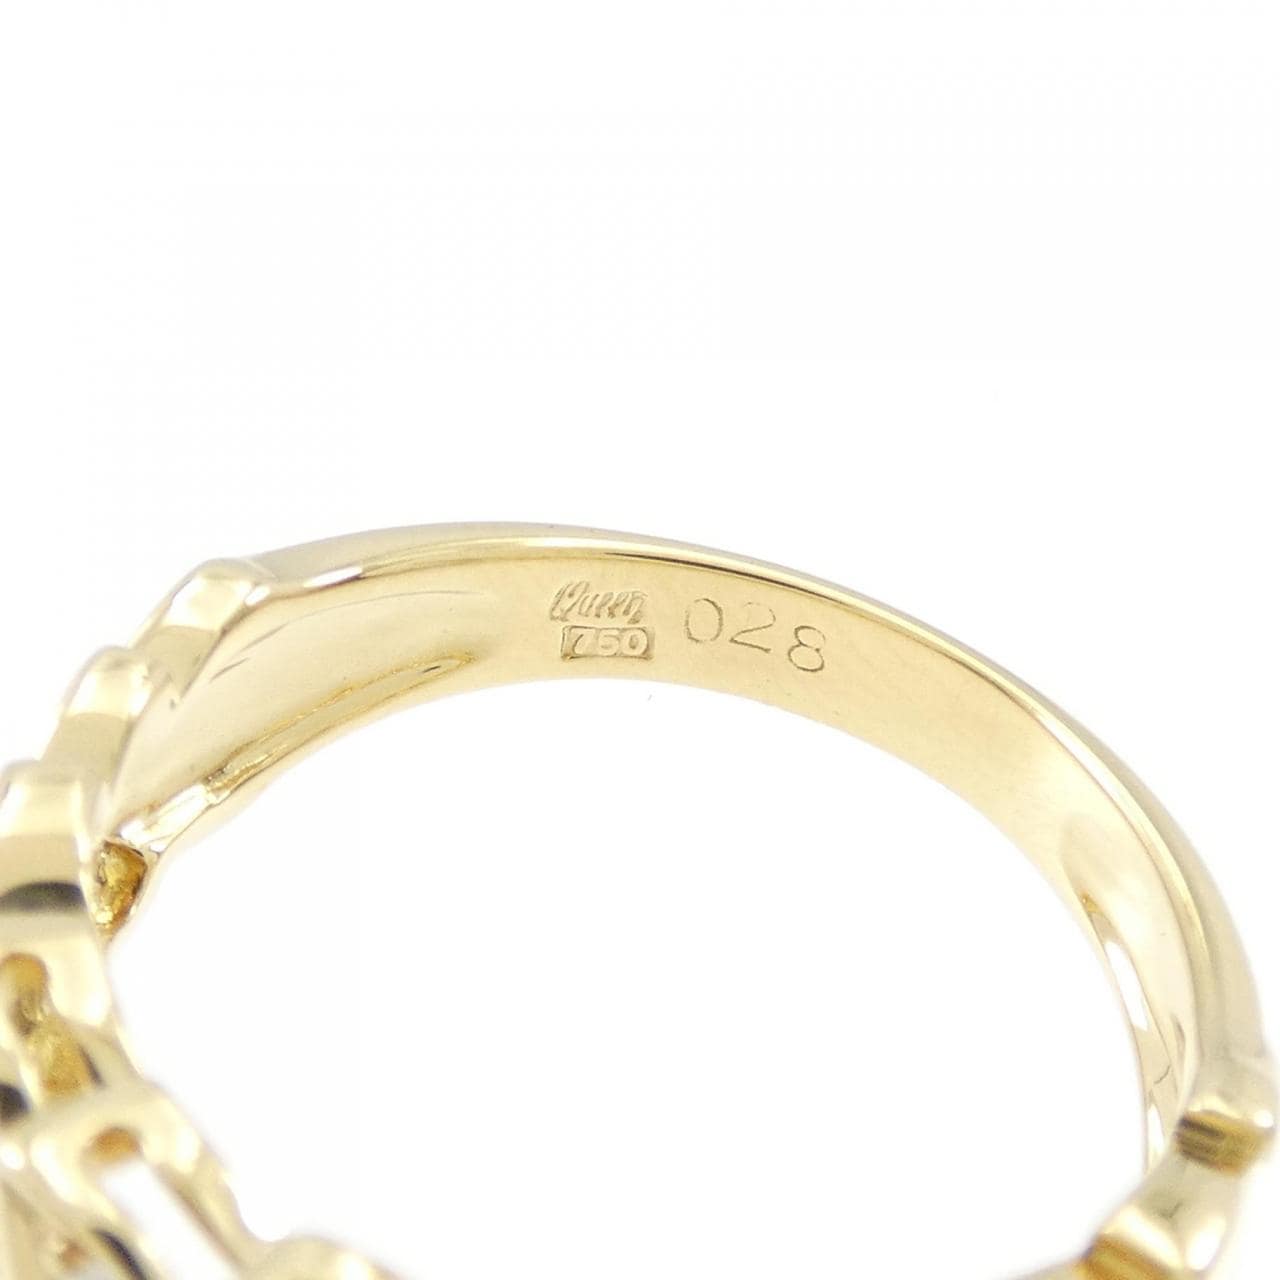 Queen Diamond ring 0.28CT